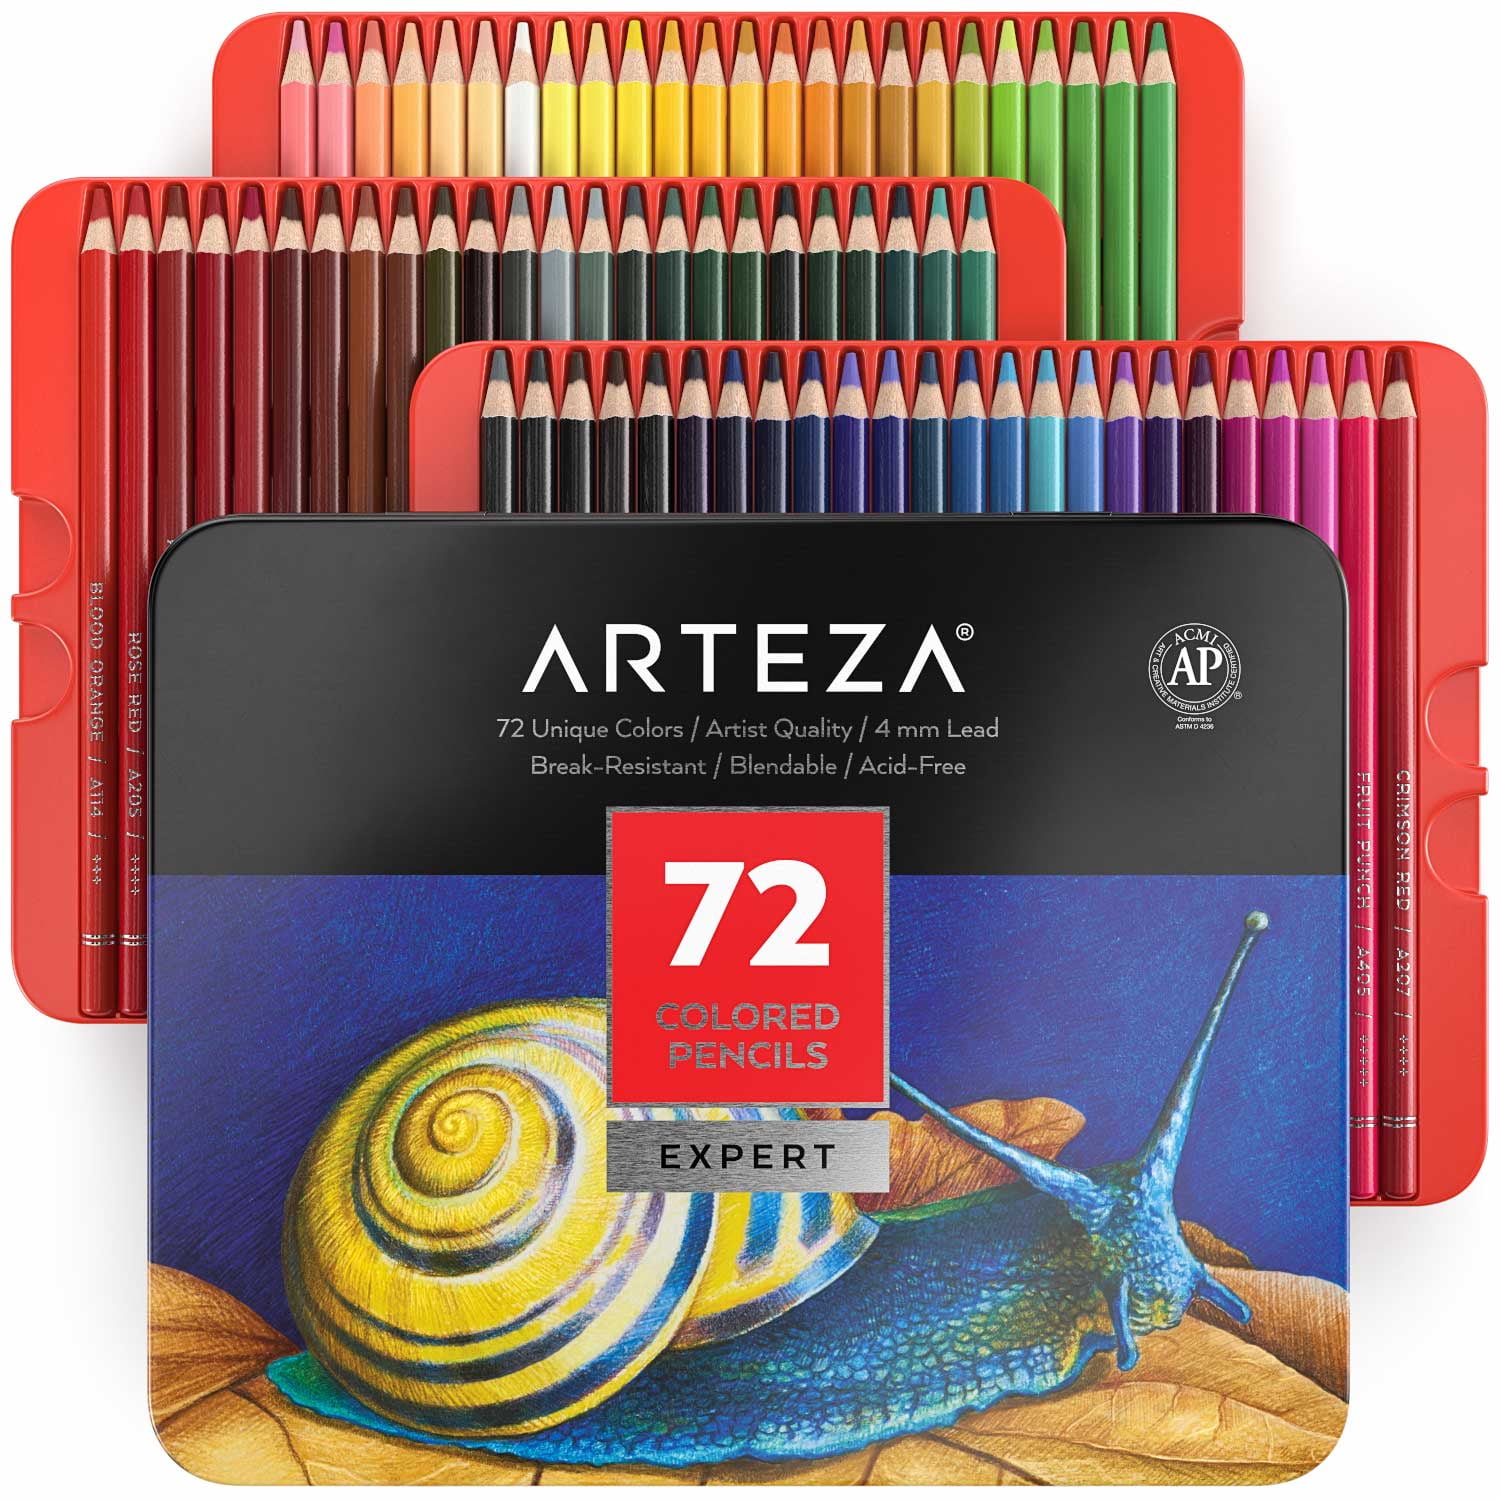 ARTEZA Professional Colored Pencils, Set of 72